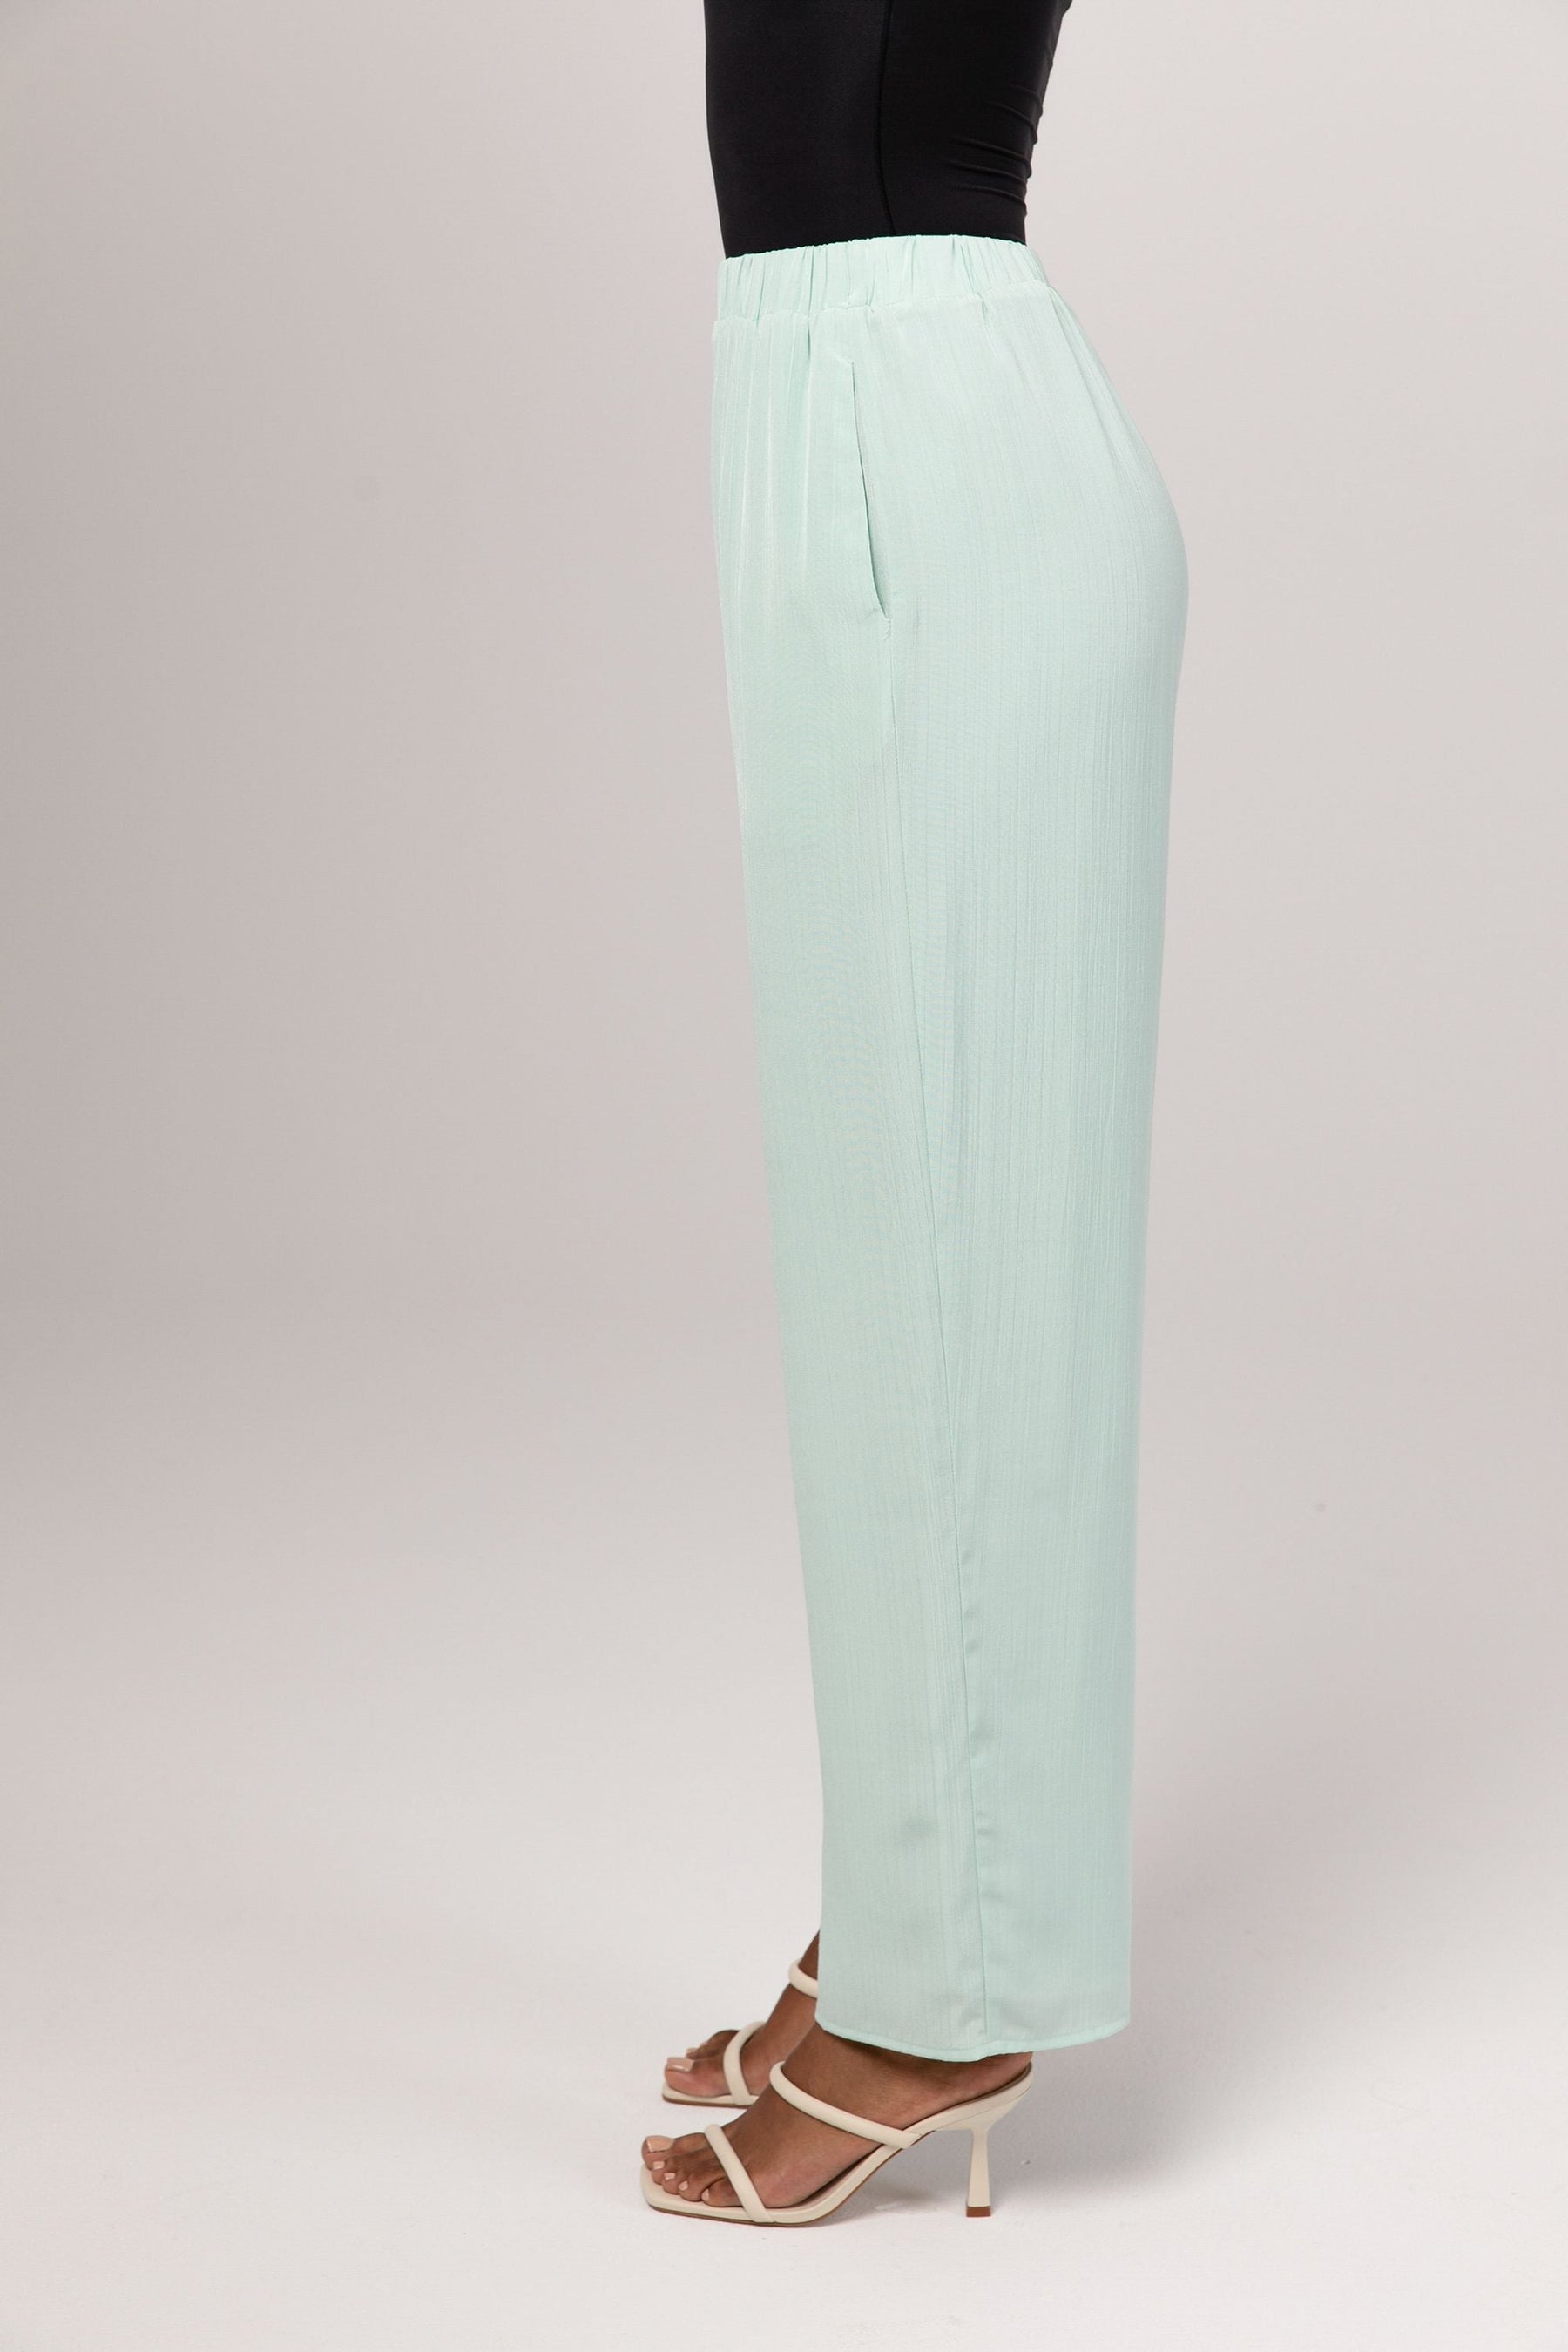 Nashwa Textured Rayon Wide Leg Pants - Mint Green epschoolboard 